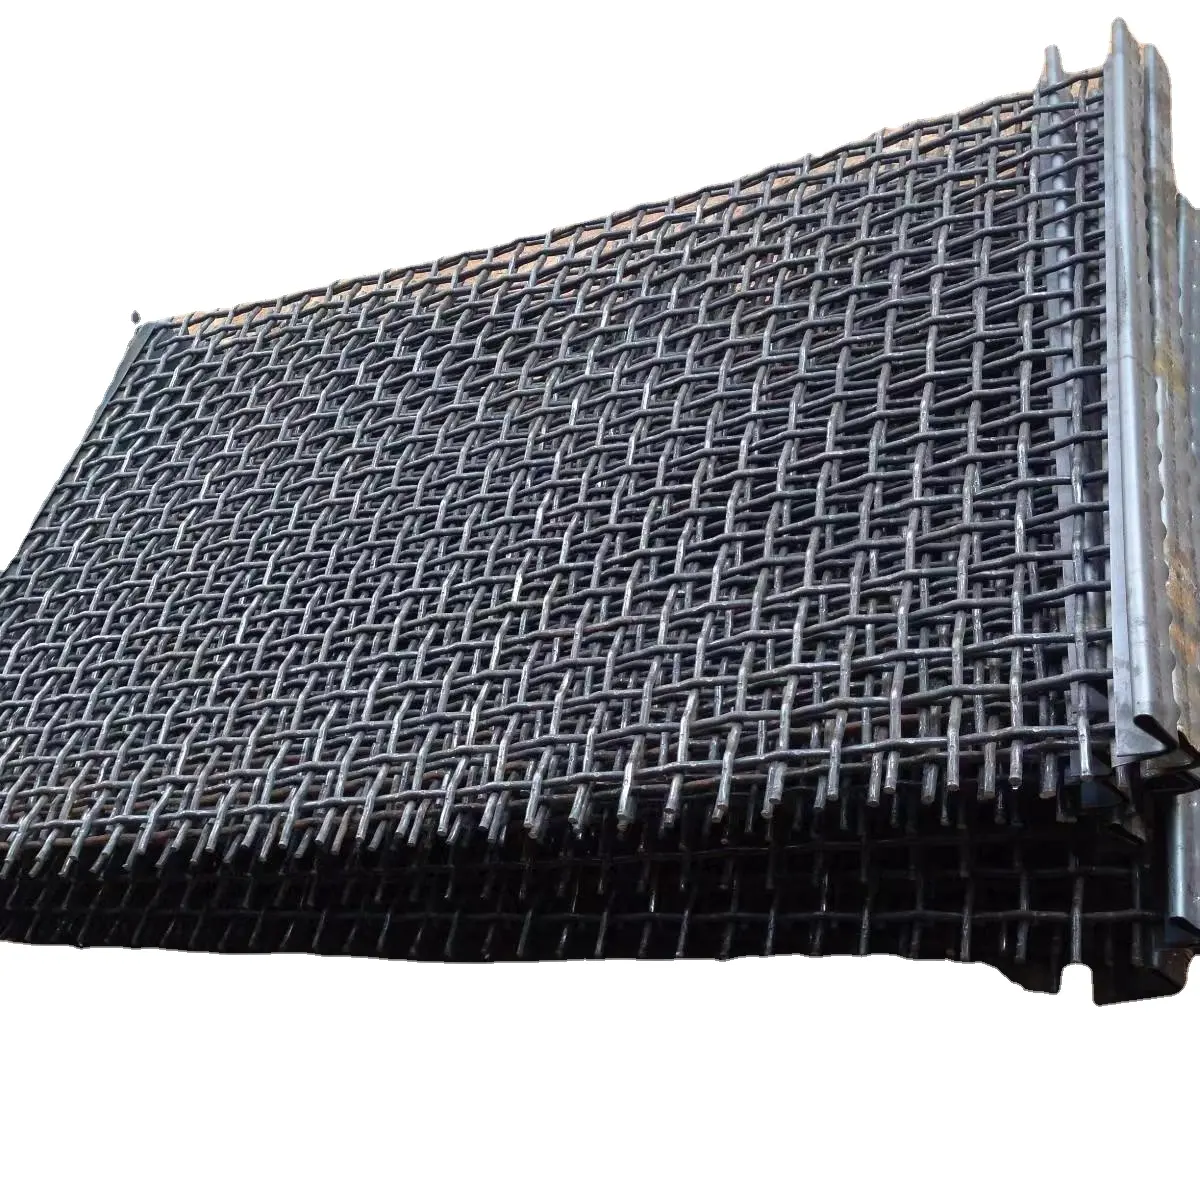 Steel mesh screen